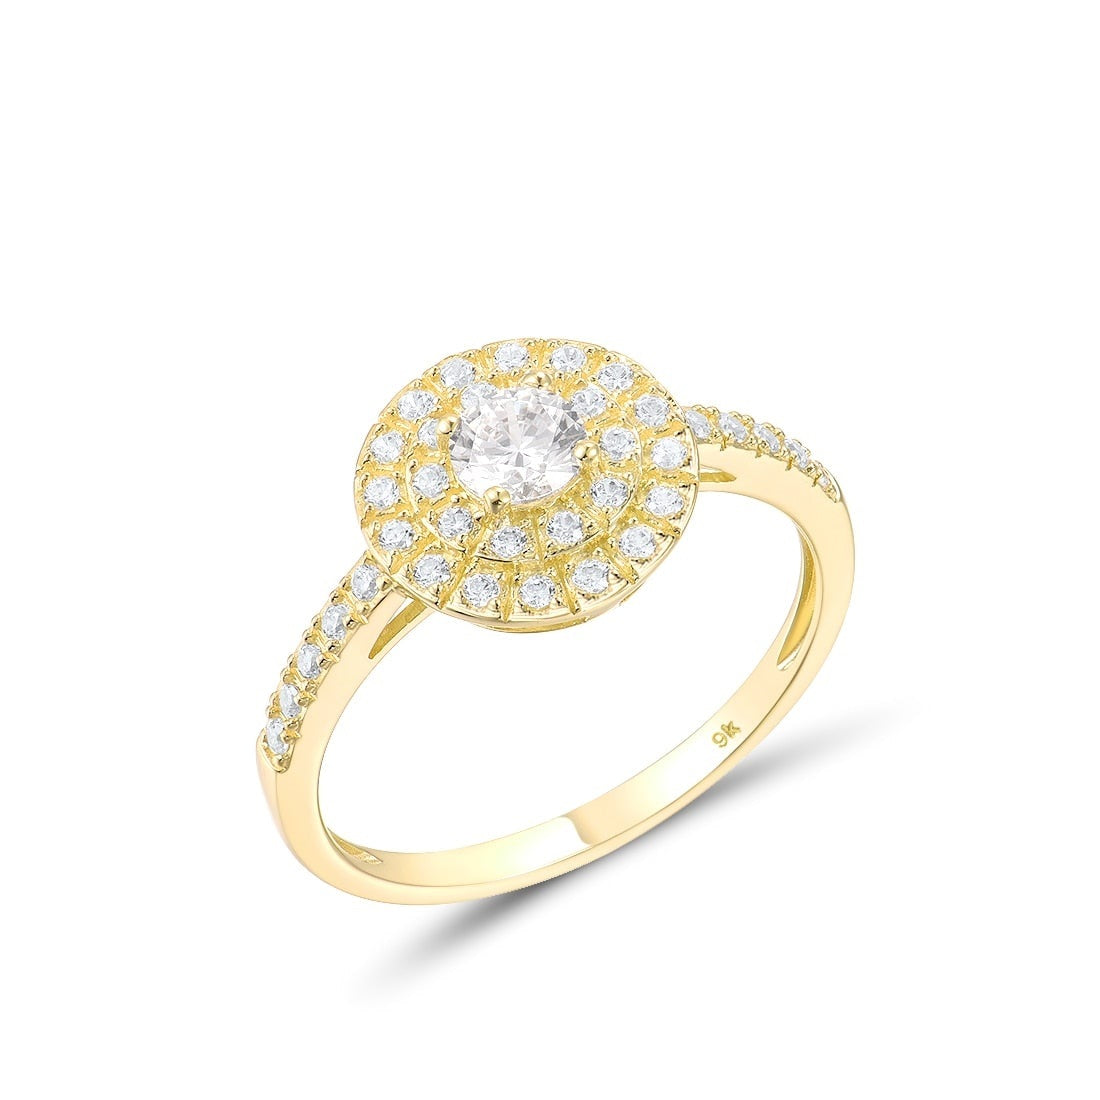 9K 375 Yellow Gold Sparkling White Elegant Ring